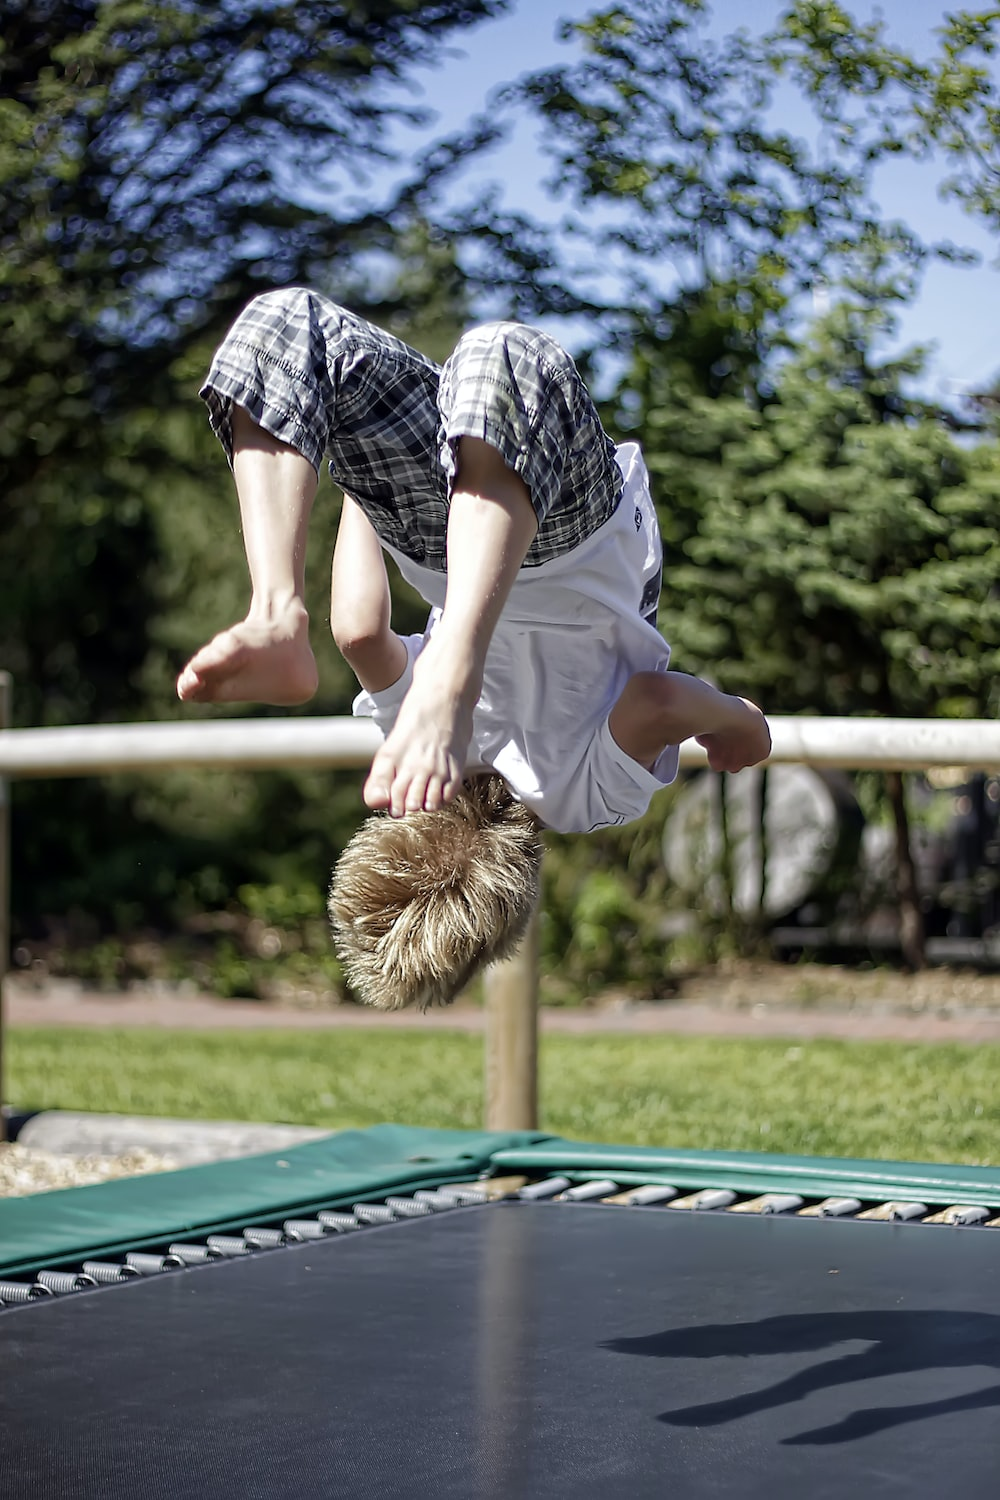 A little boy flipping on their trampoline